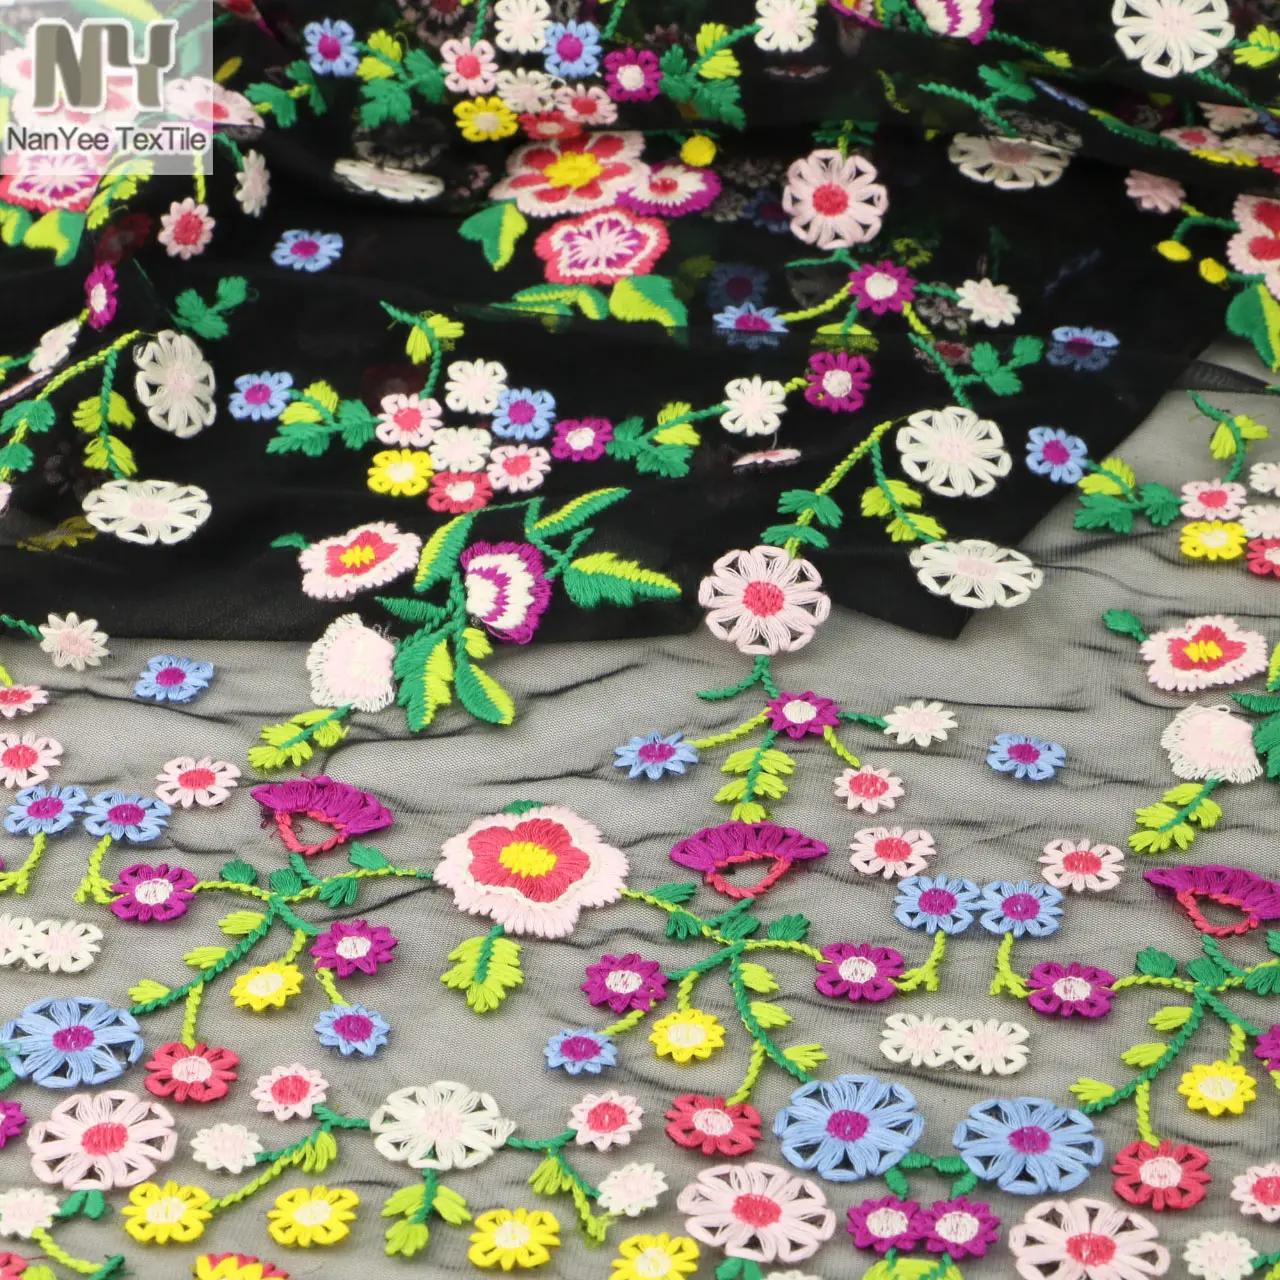 Nanyee Textile Flower Design Mehrfarbiger Faden Bestickter Netz stoff